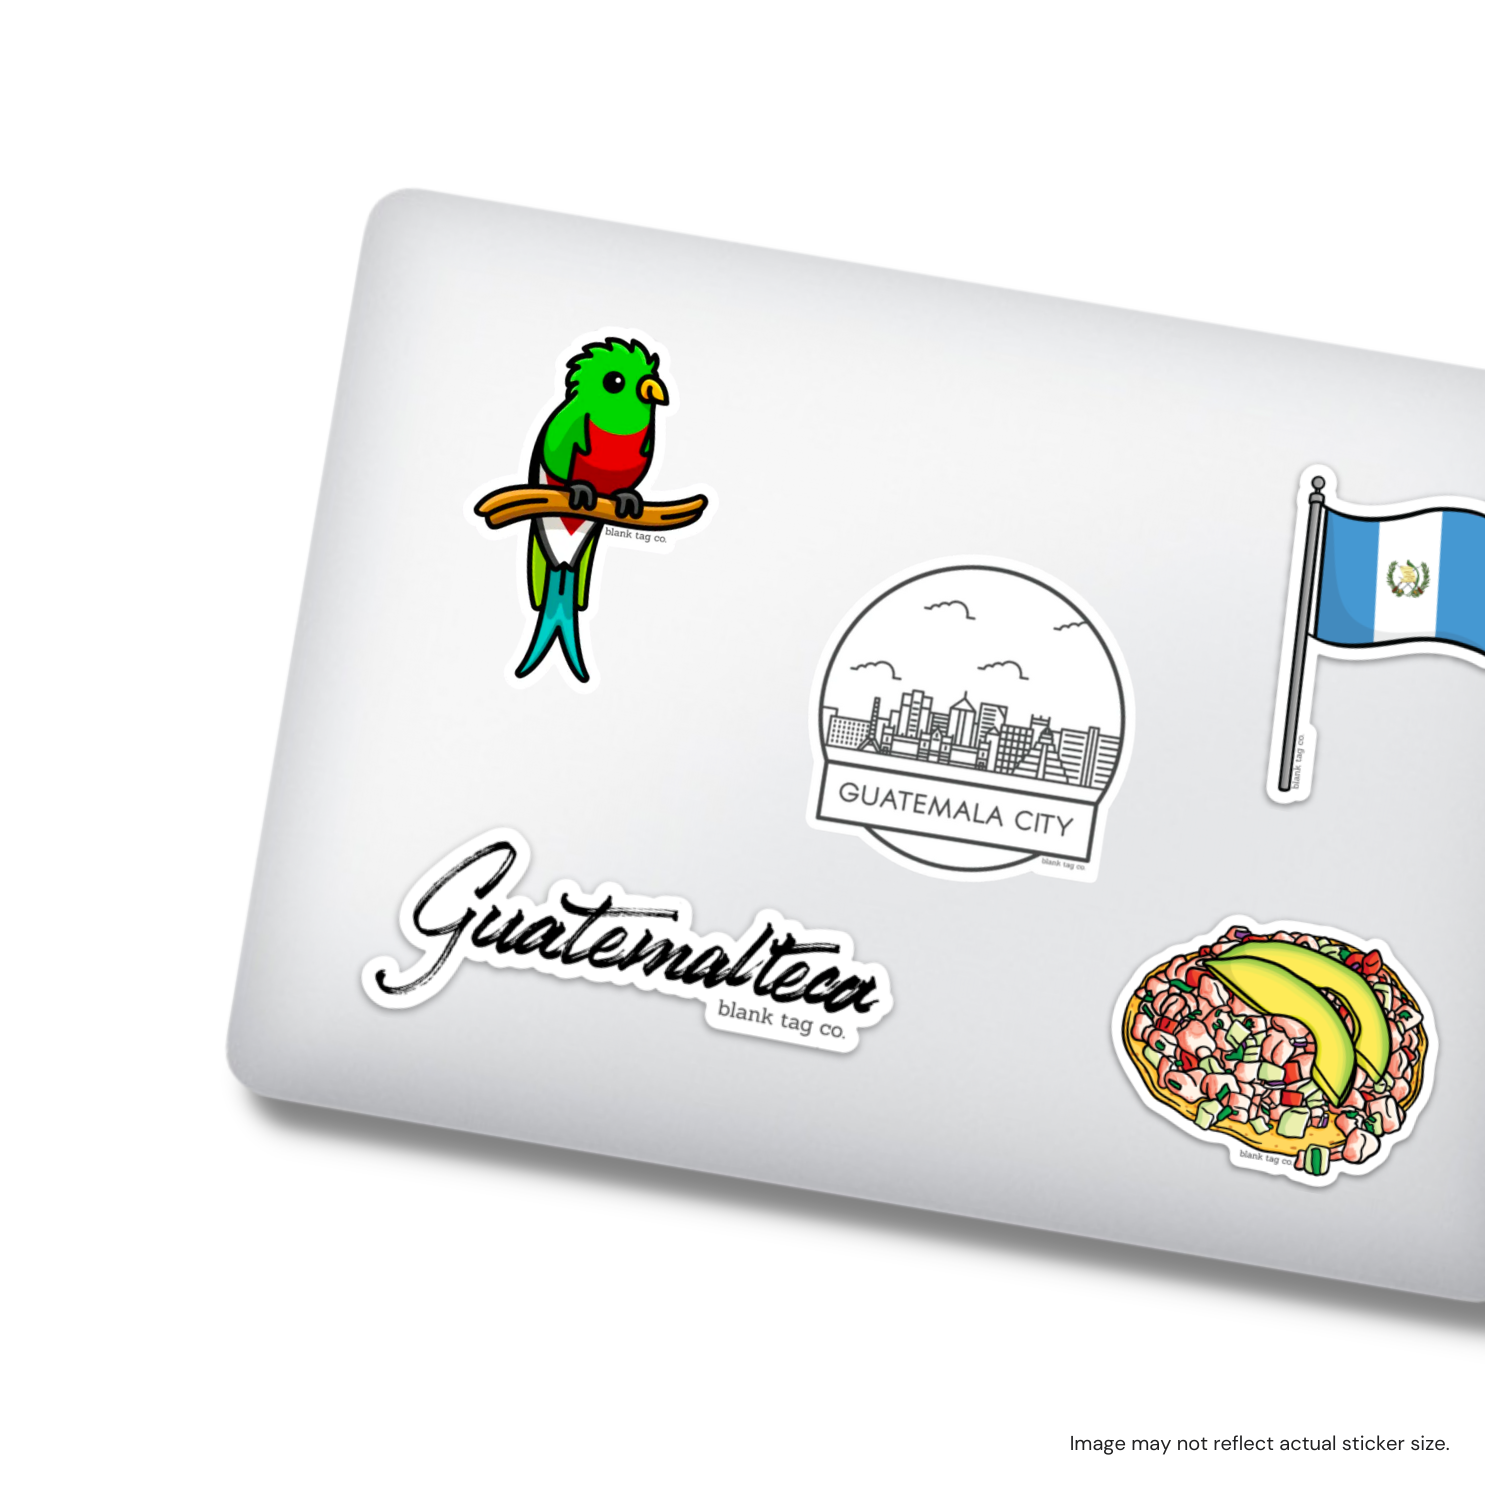 The Guatemalteca Sticker